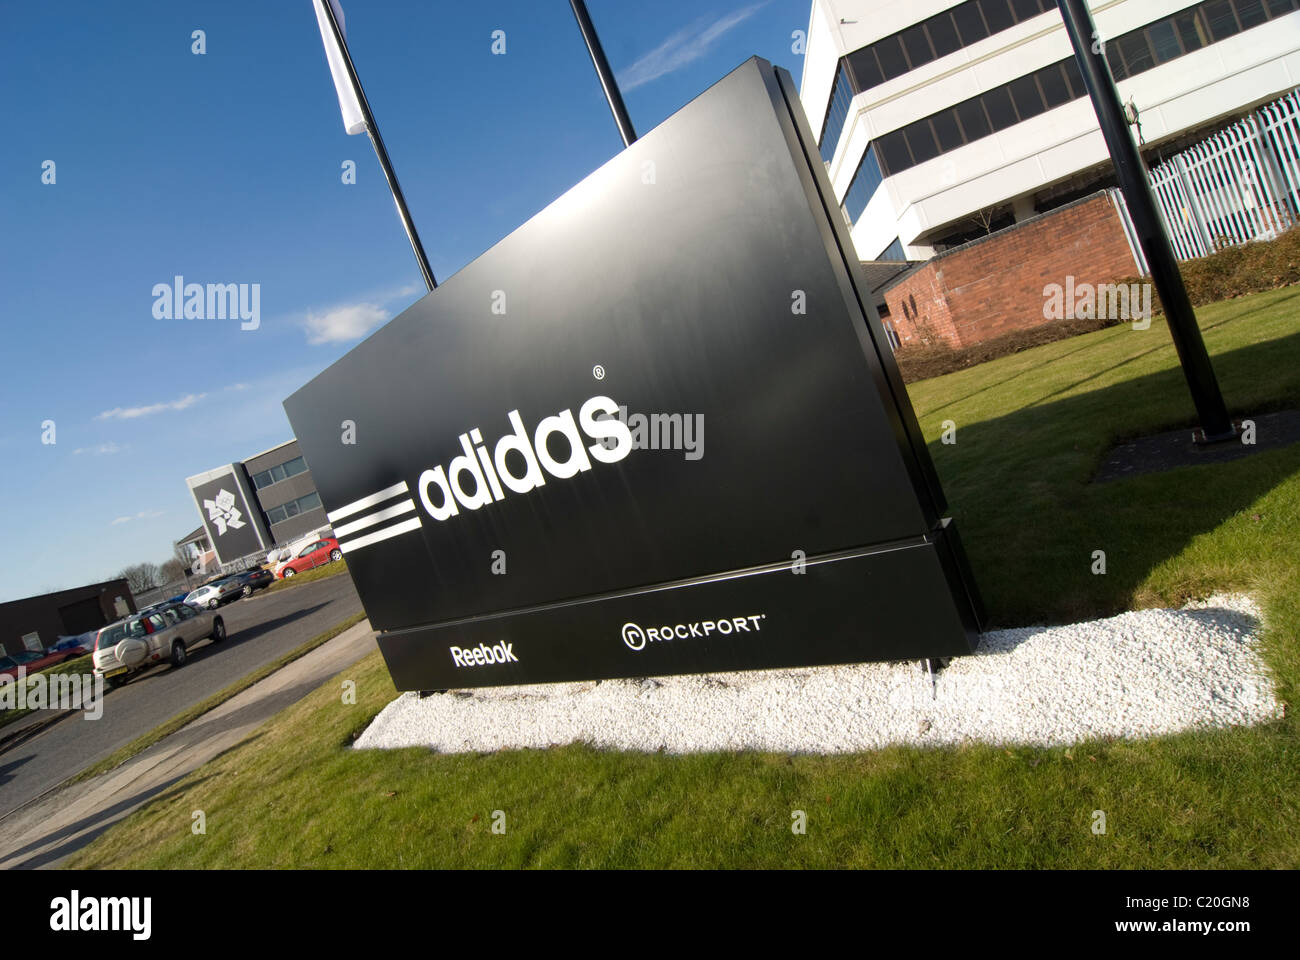 adidas office stockport